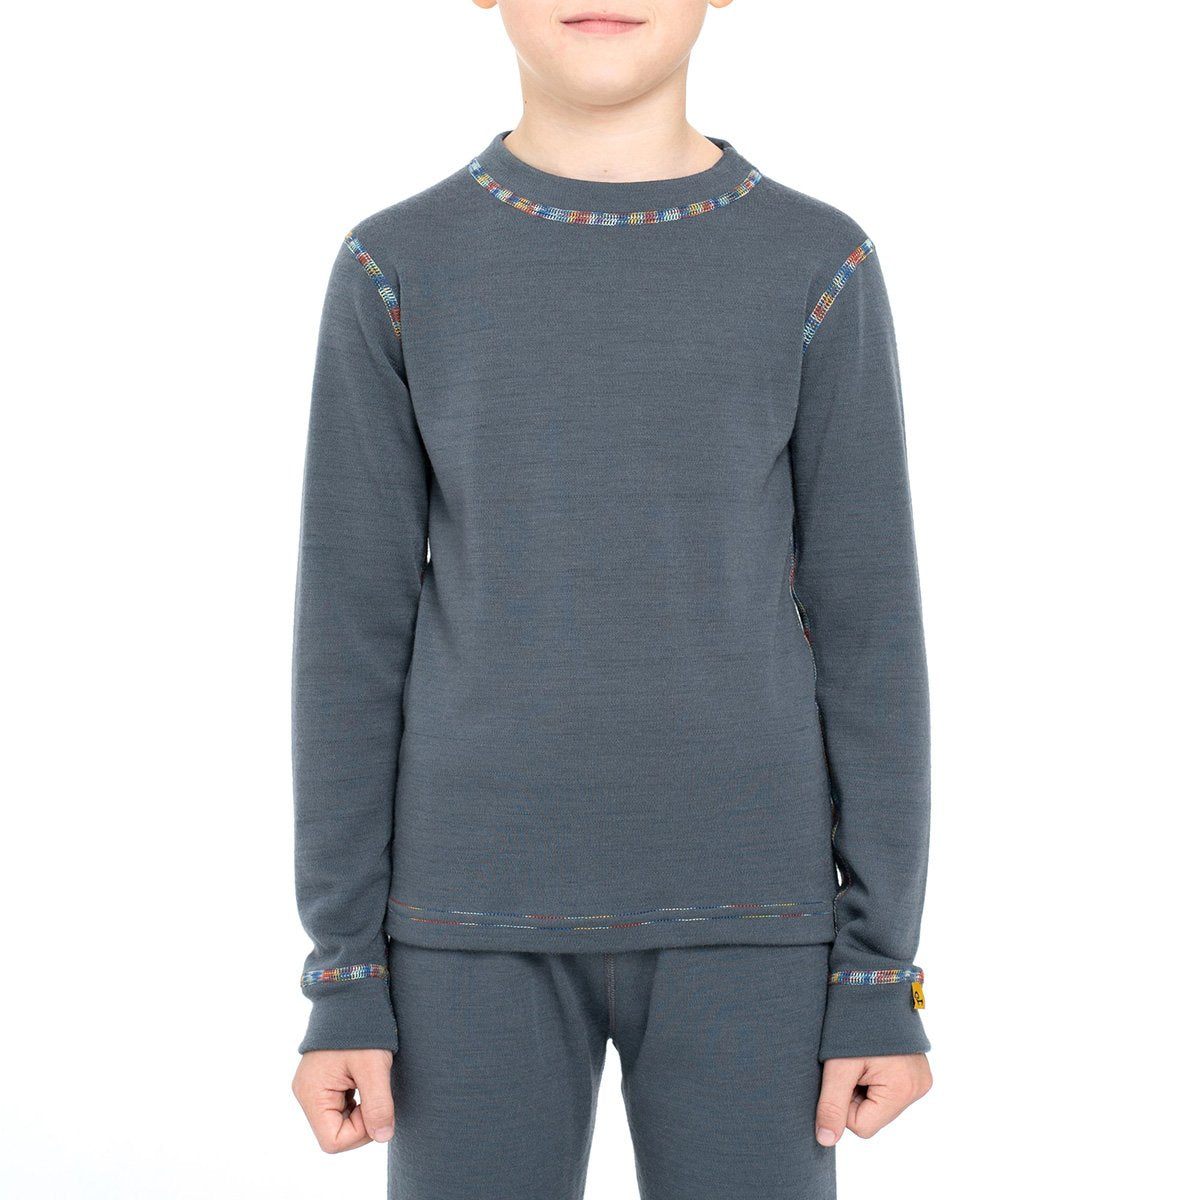 MENIQUE Long Sleeve Crew 100% Merino Wool Kids Shirt Perfect Grey